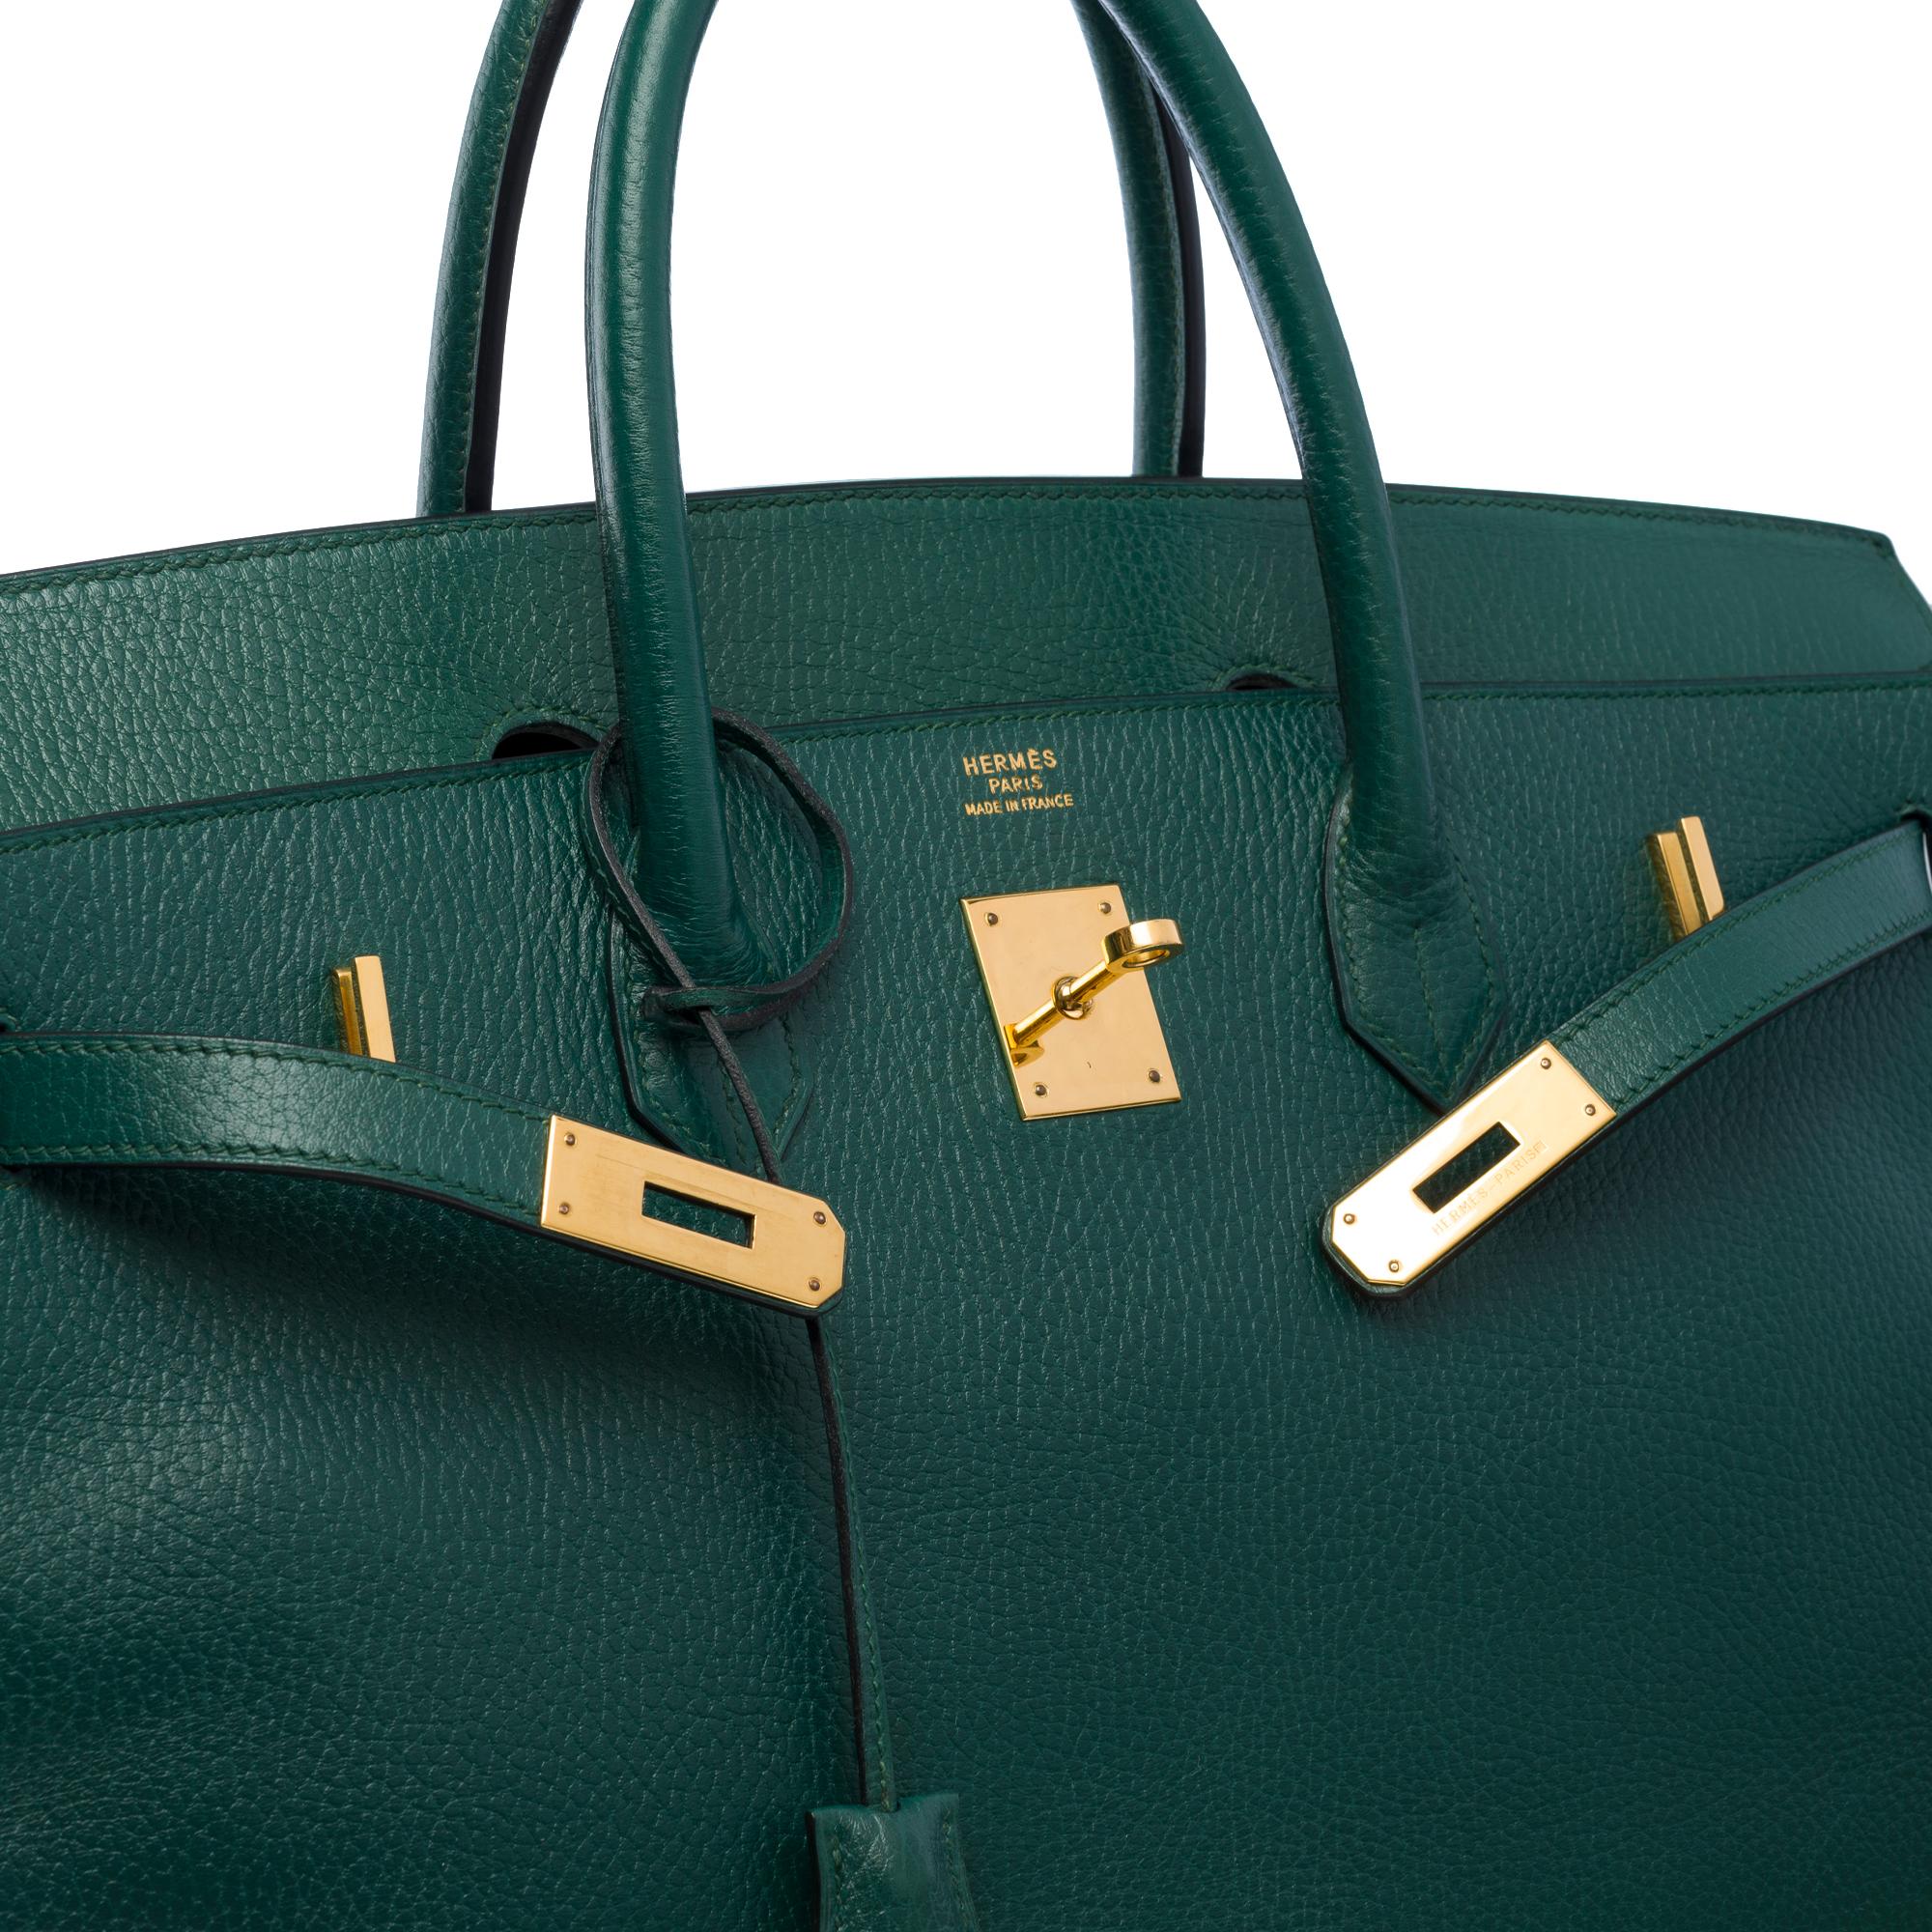 Rare Hermes Birkin 40 handbag in Emerald Green Ardennes Calf leather, GHW 1